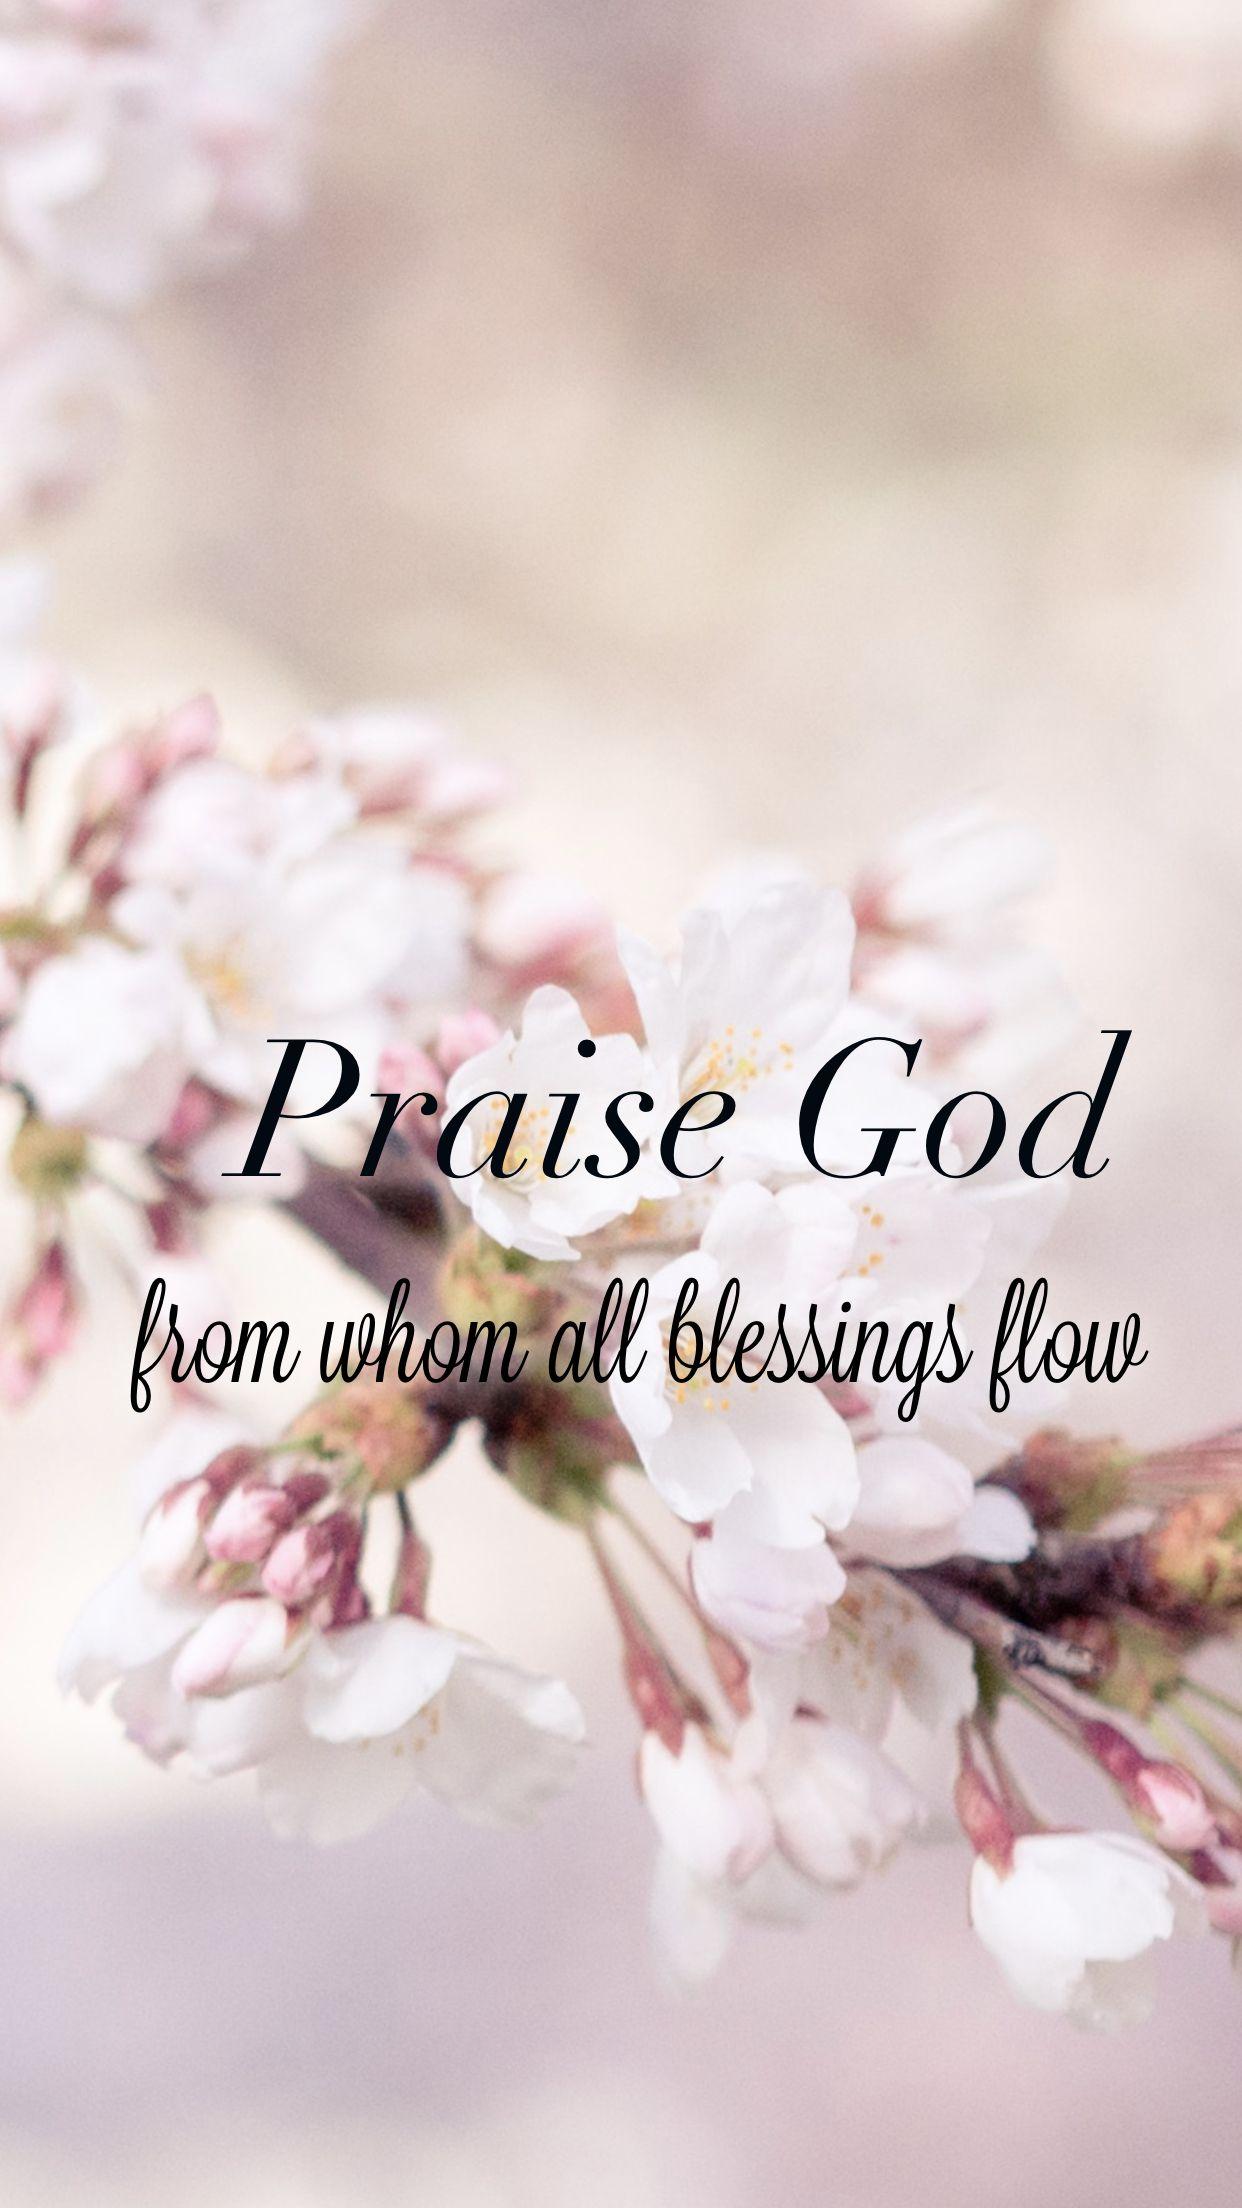 Phone wallpaper. Praise quotes, Quotes about god, Praise god